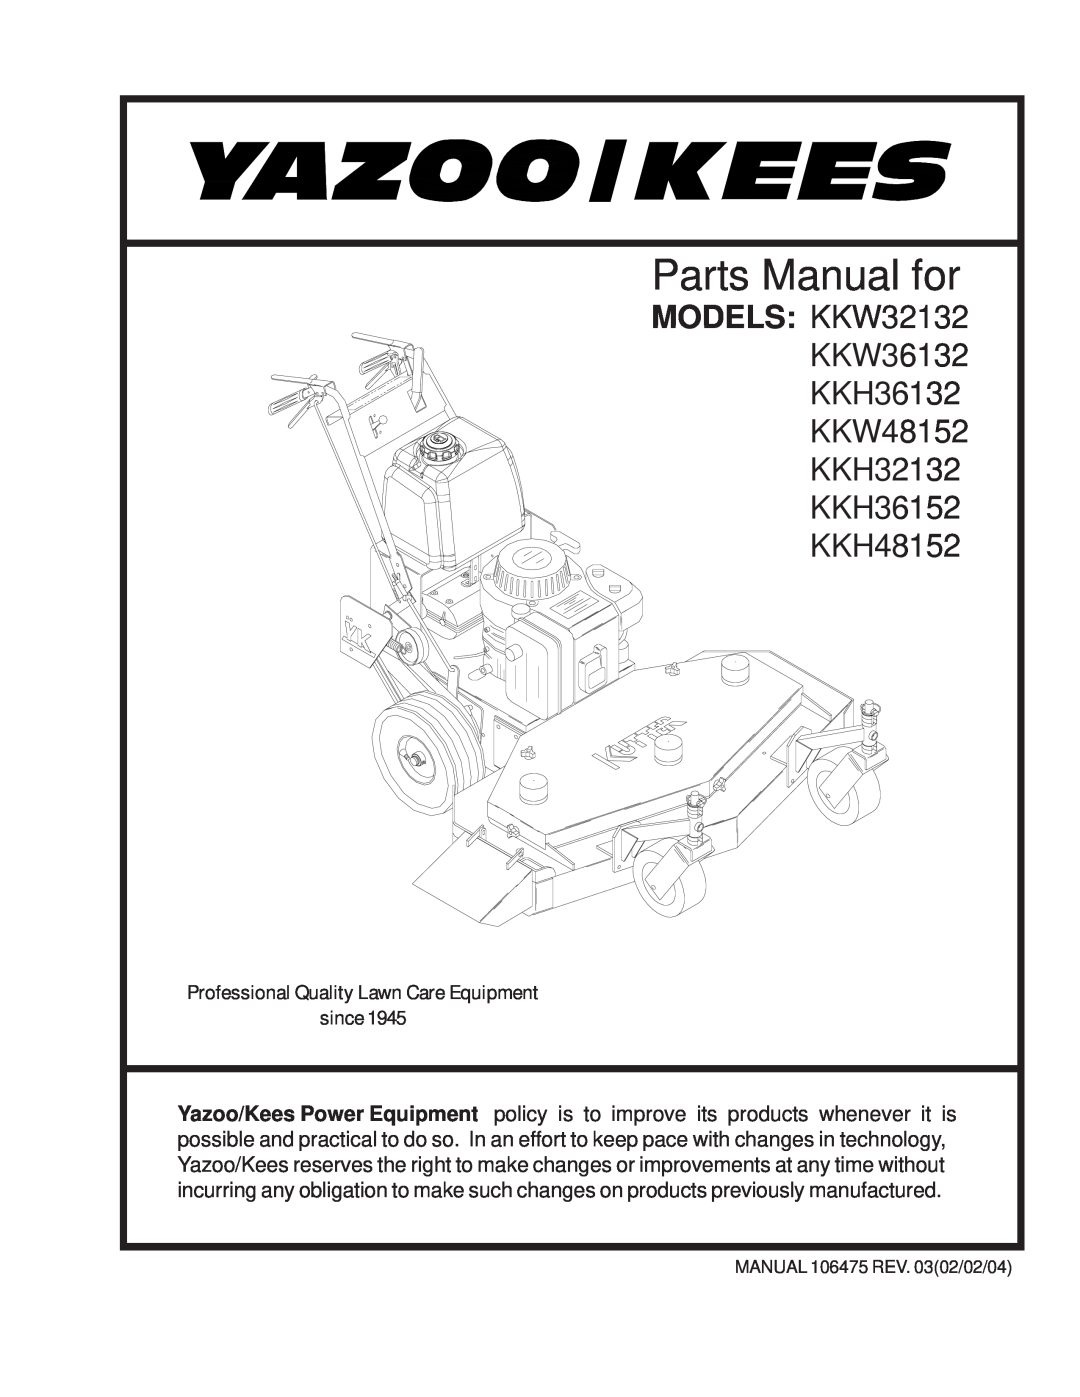 Yazoo/Kees manual Parts Manual for, MODELS KKW32132, KKW36132 KKH36132 KKW48152 KKH32132 KKH36152, KKH48152 